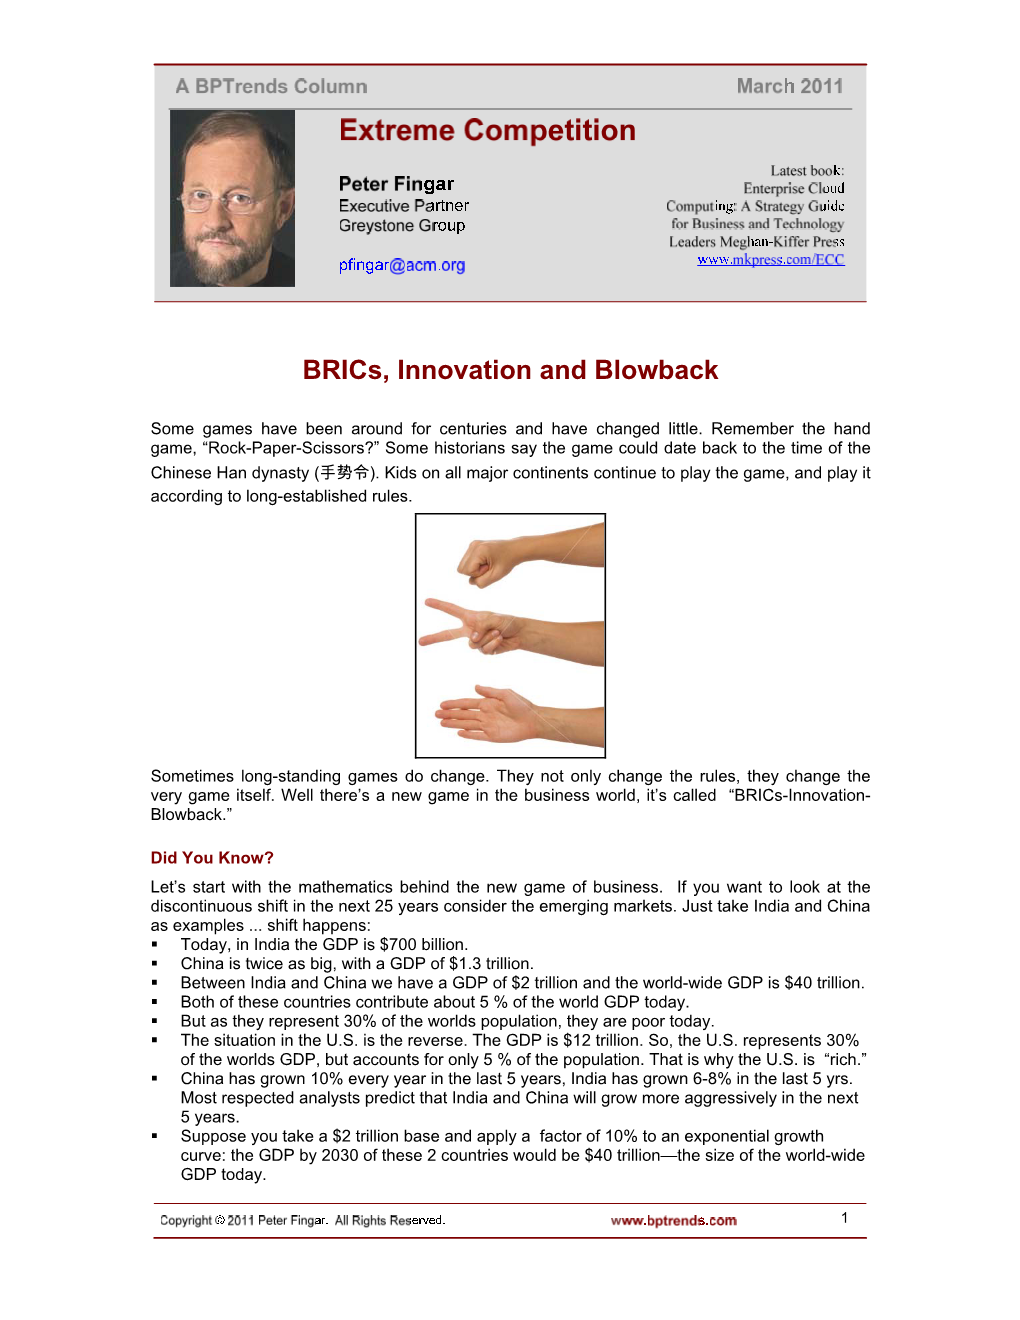 Brics, Innovation and Blowback